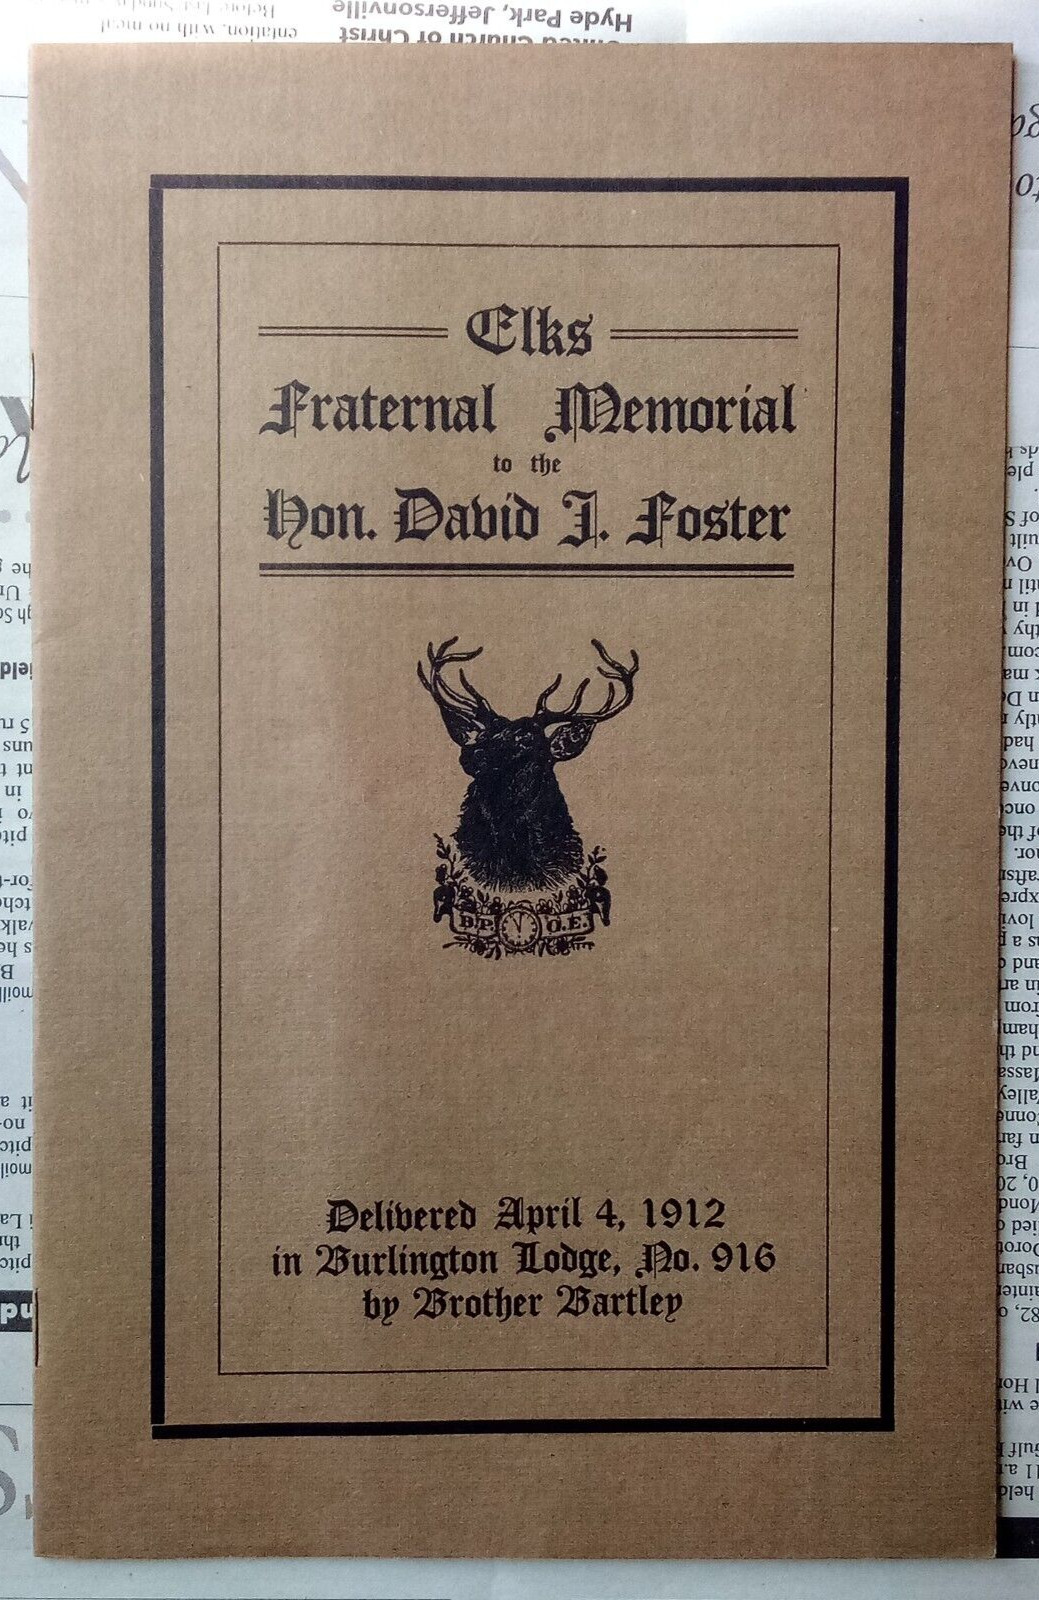 1912 - Elks Fraternal Memorial - Hon David J Foster - Burlington, Vermont